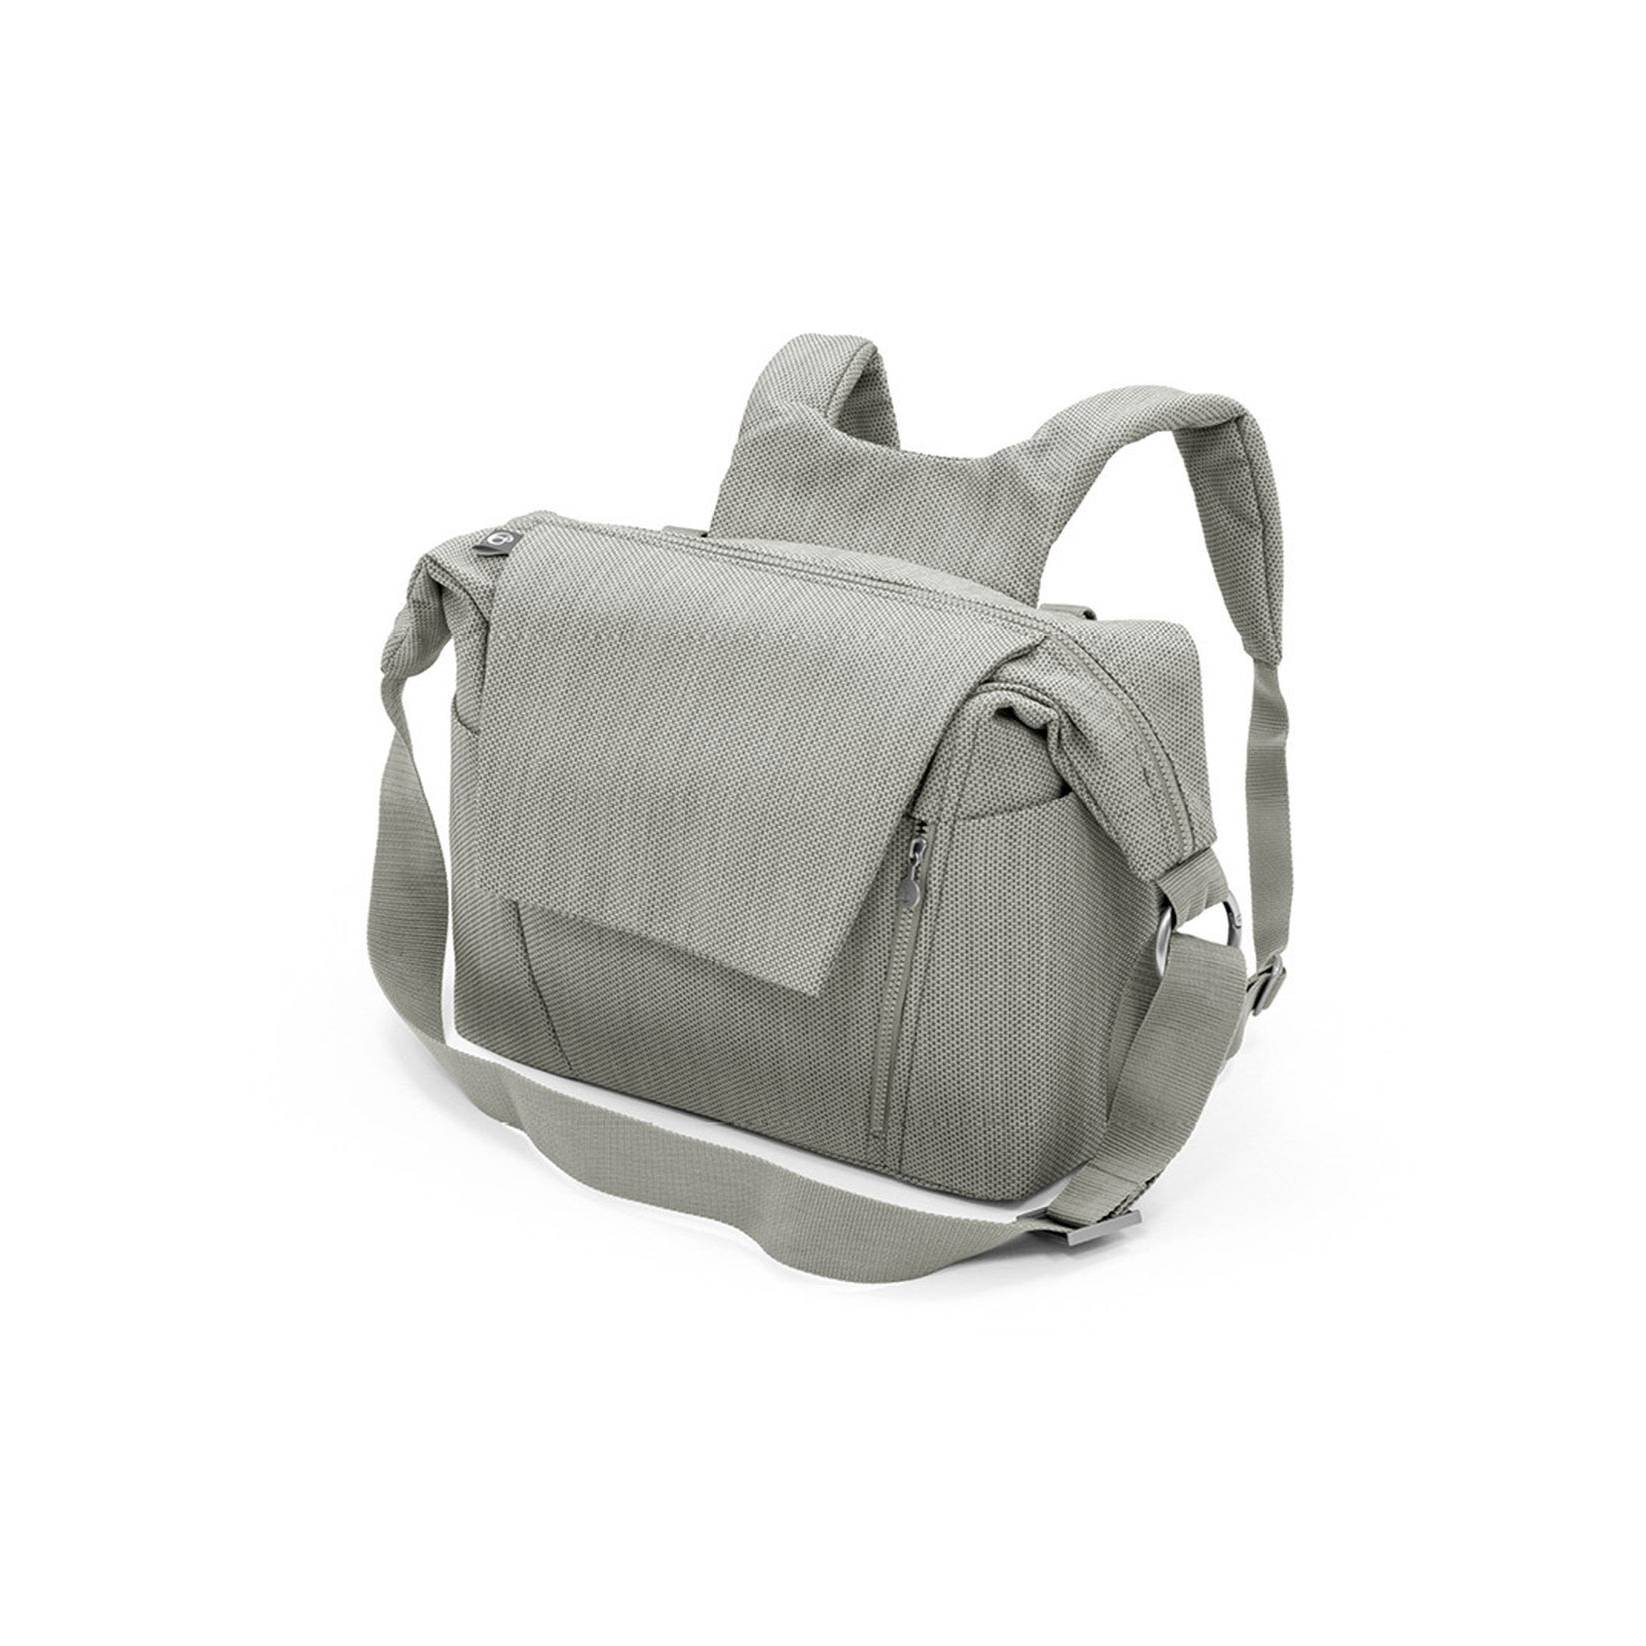 STOKKE Changing bag Brushed Grey